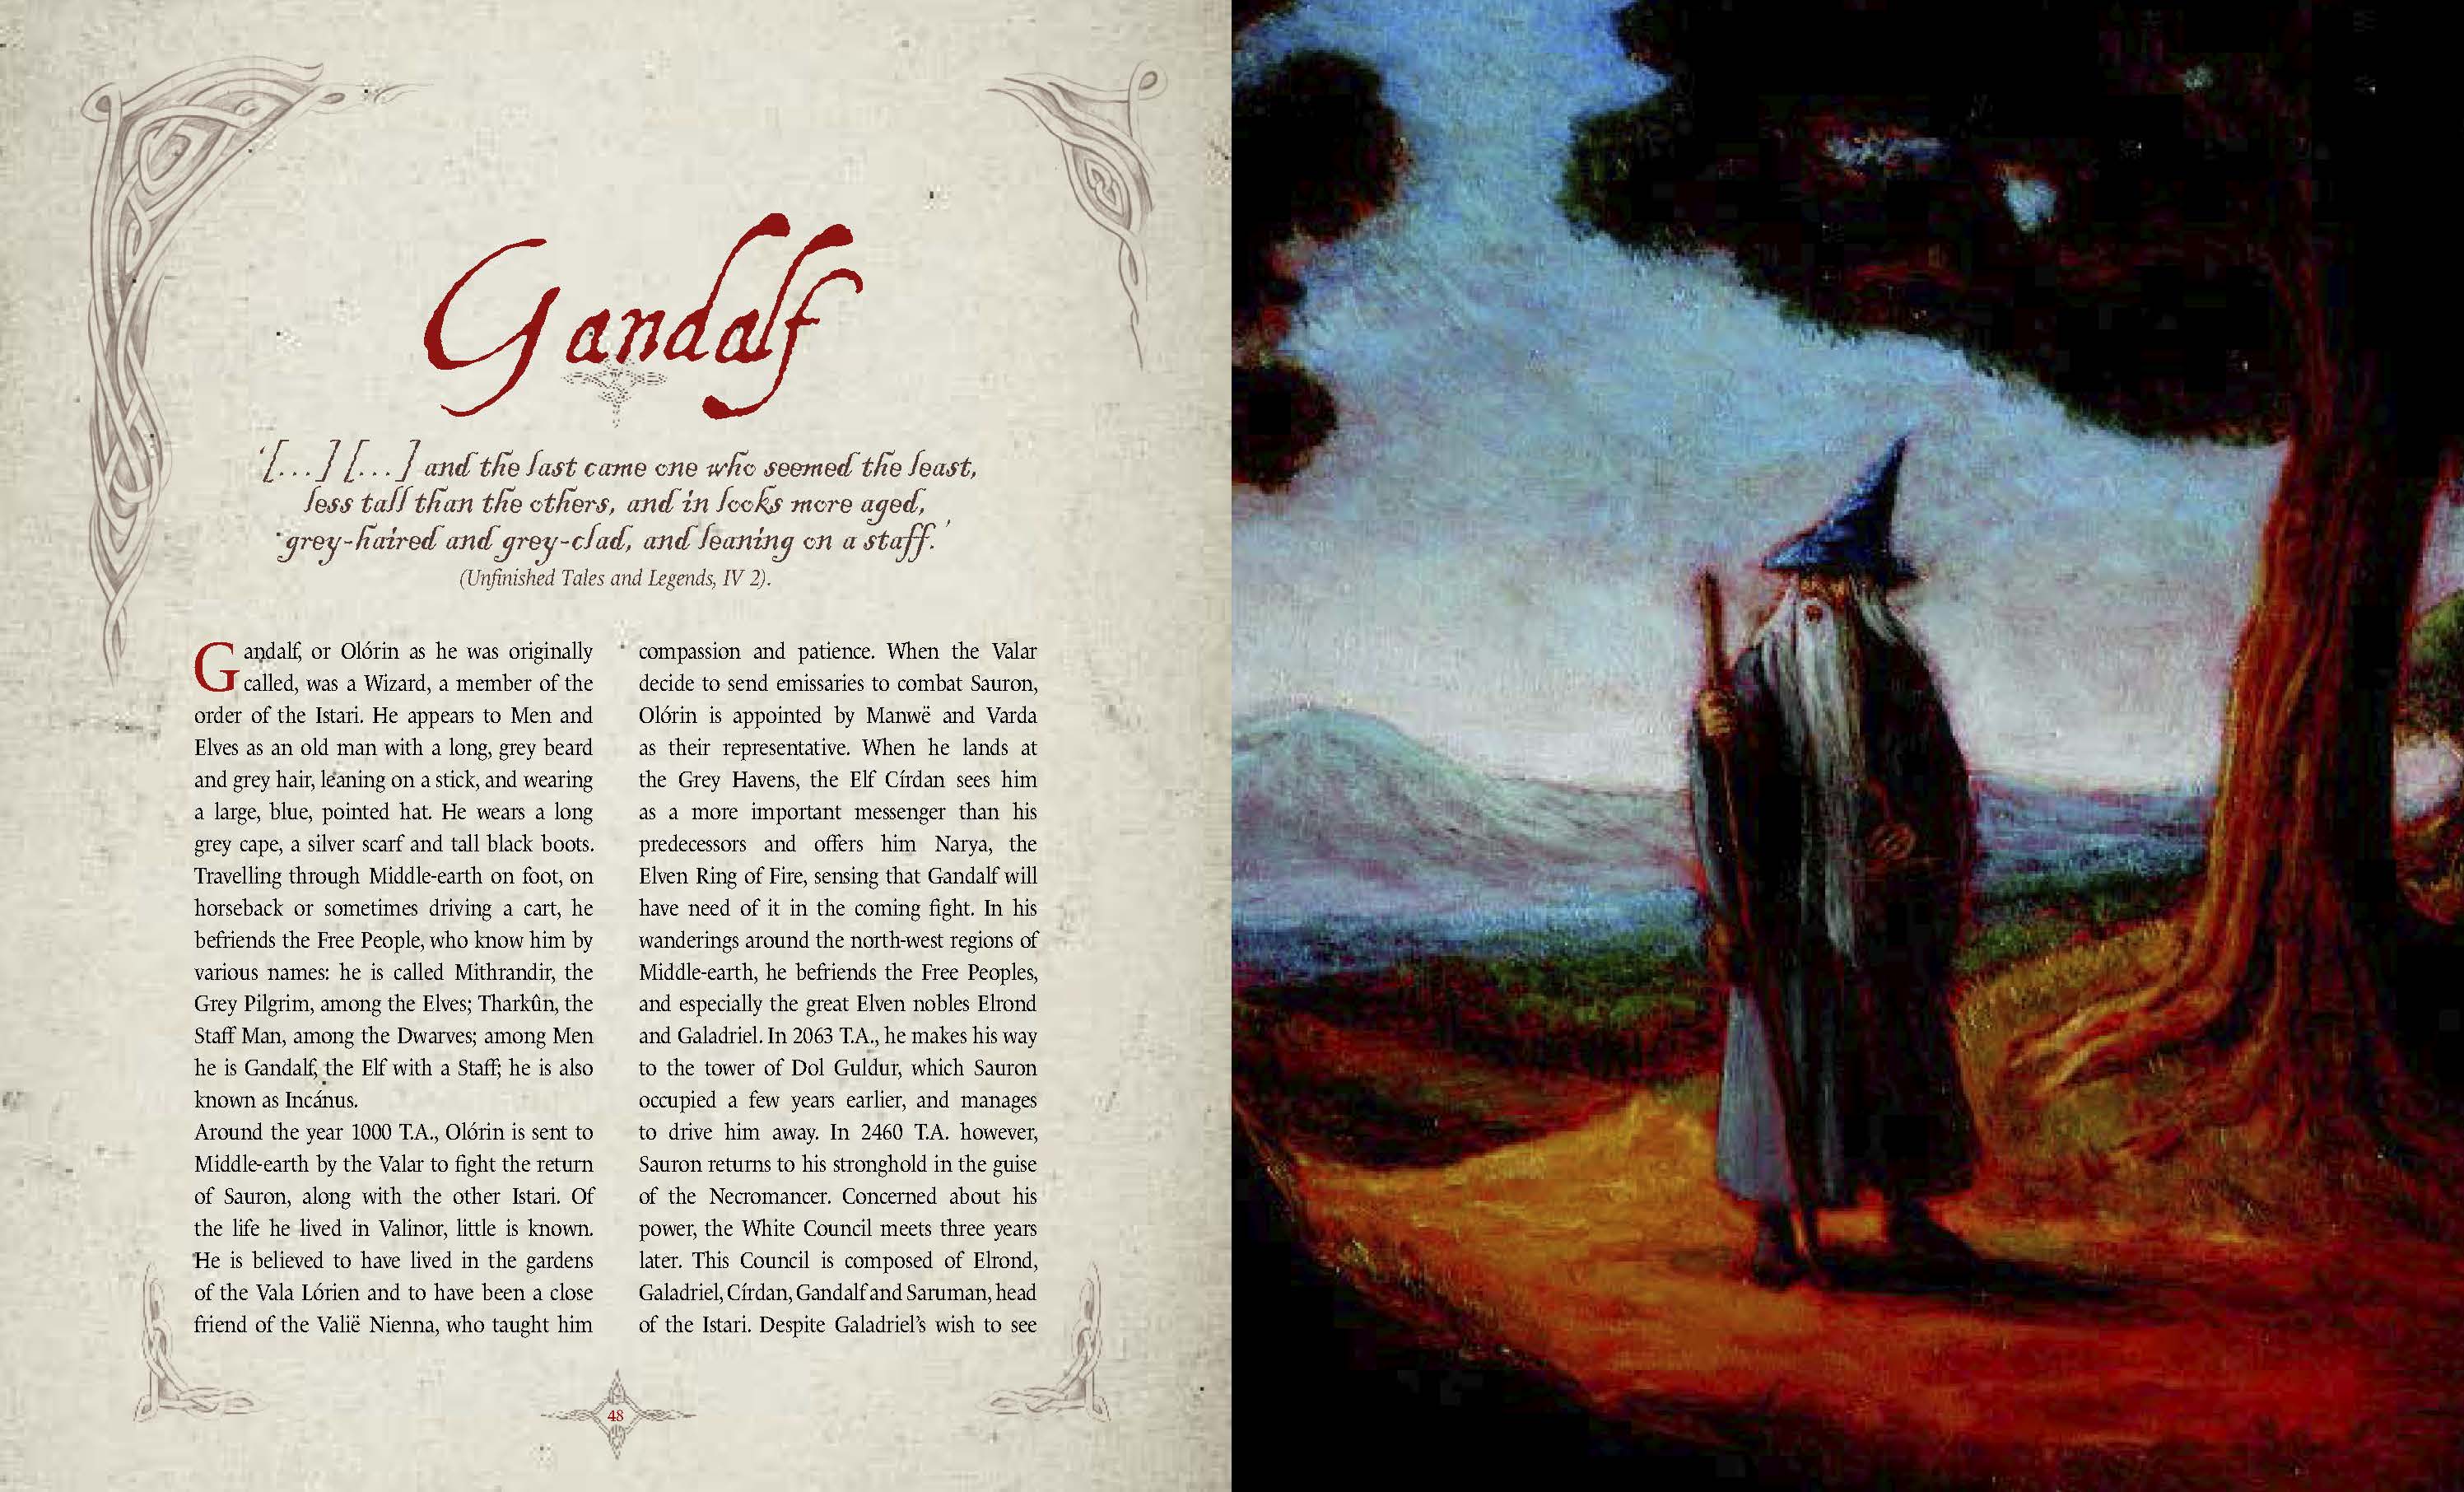 The Hobbit Encyclopedia